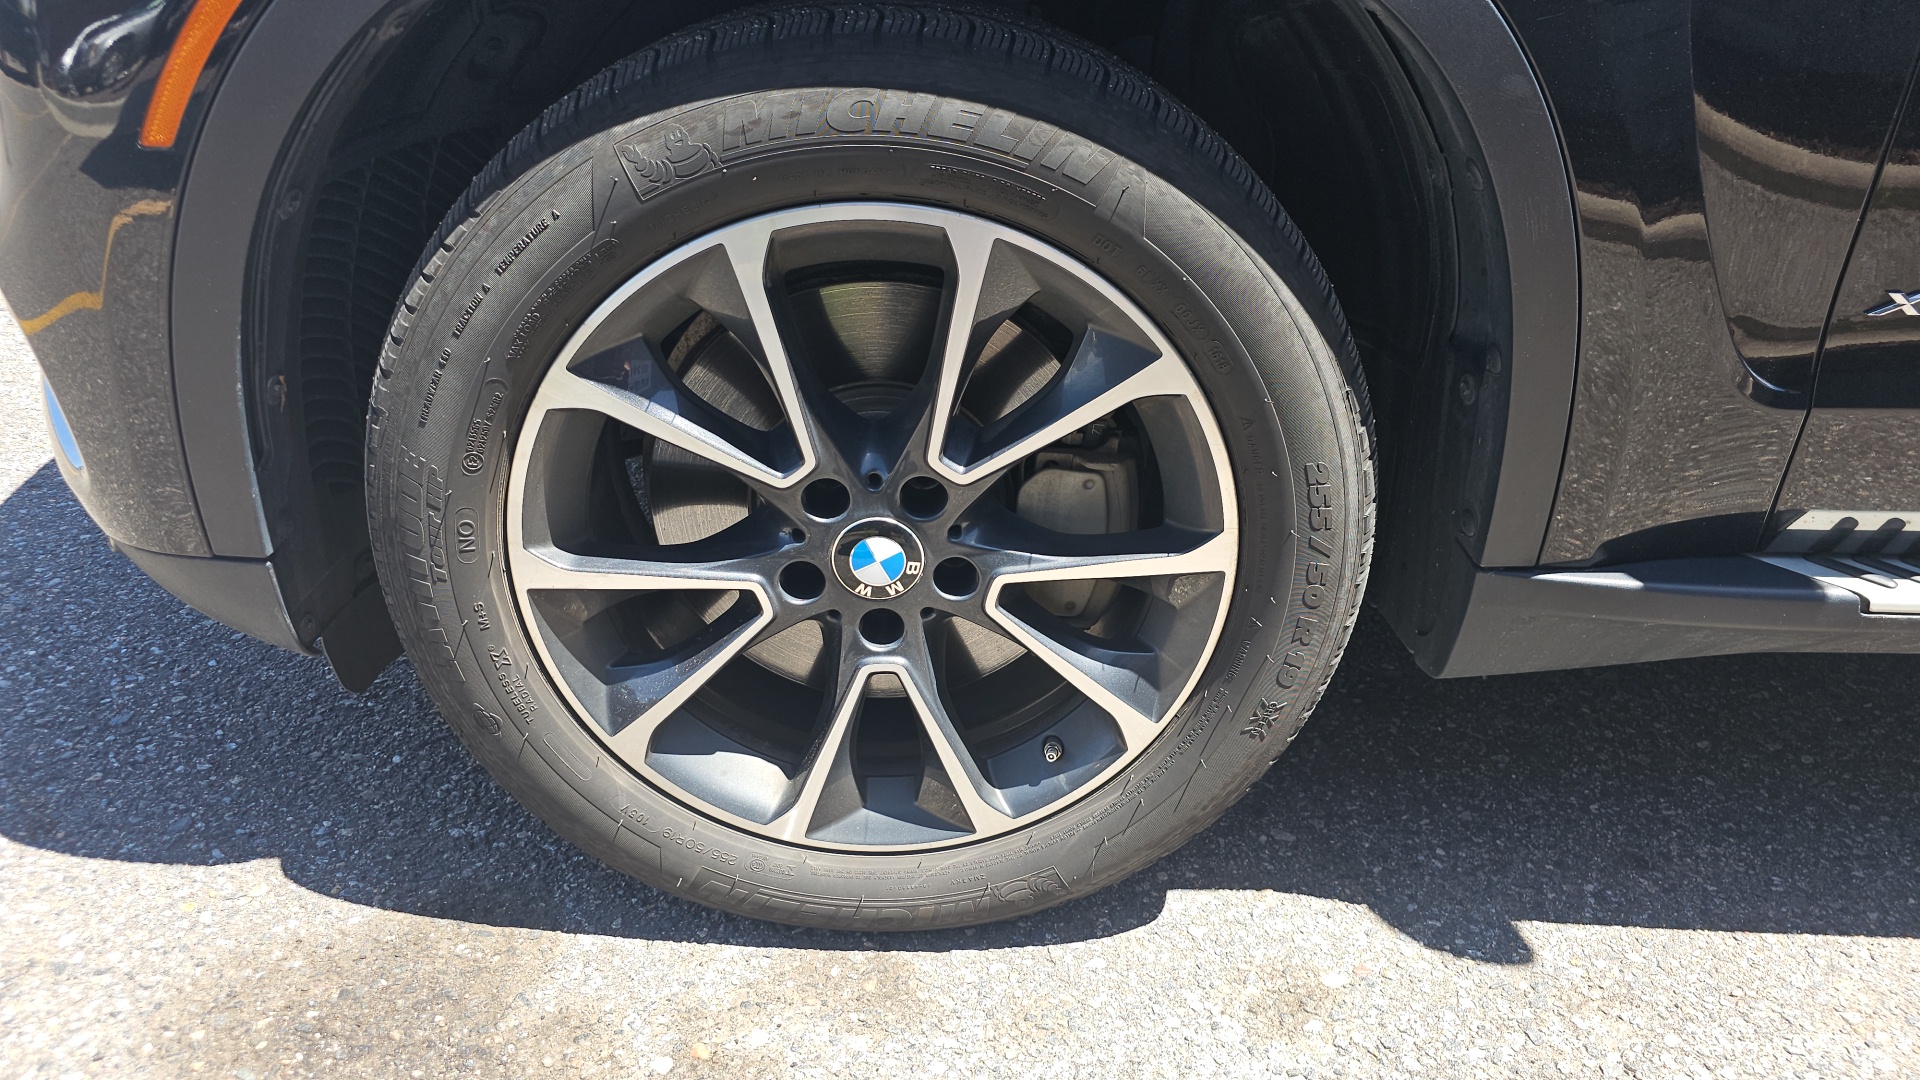 2016 BMW X5 xDrive50i AWD, Twin Turbo V8, Navigation, Sunroof, 24